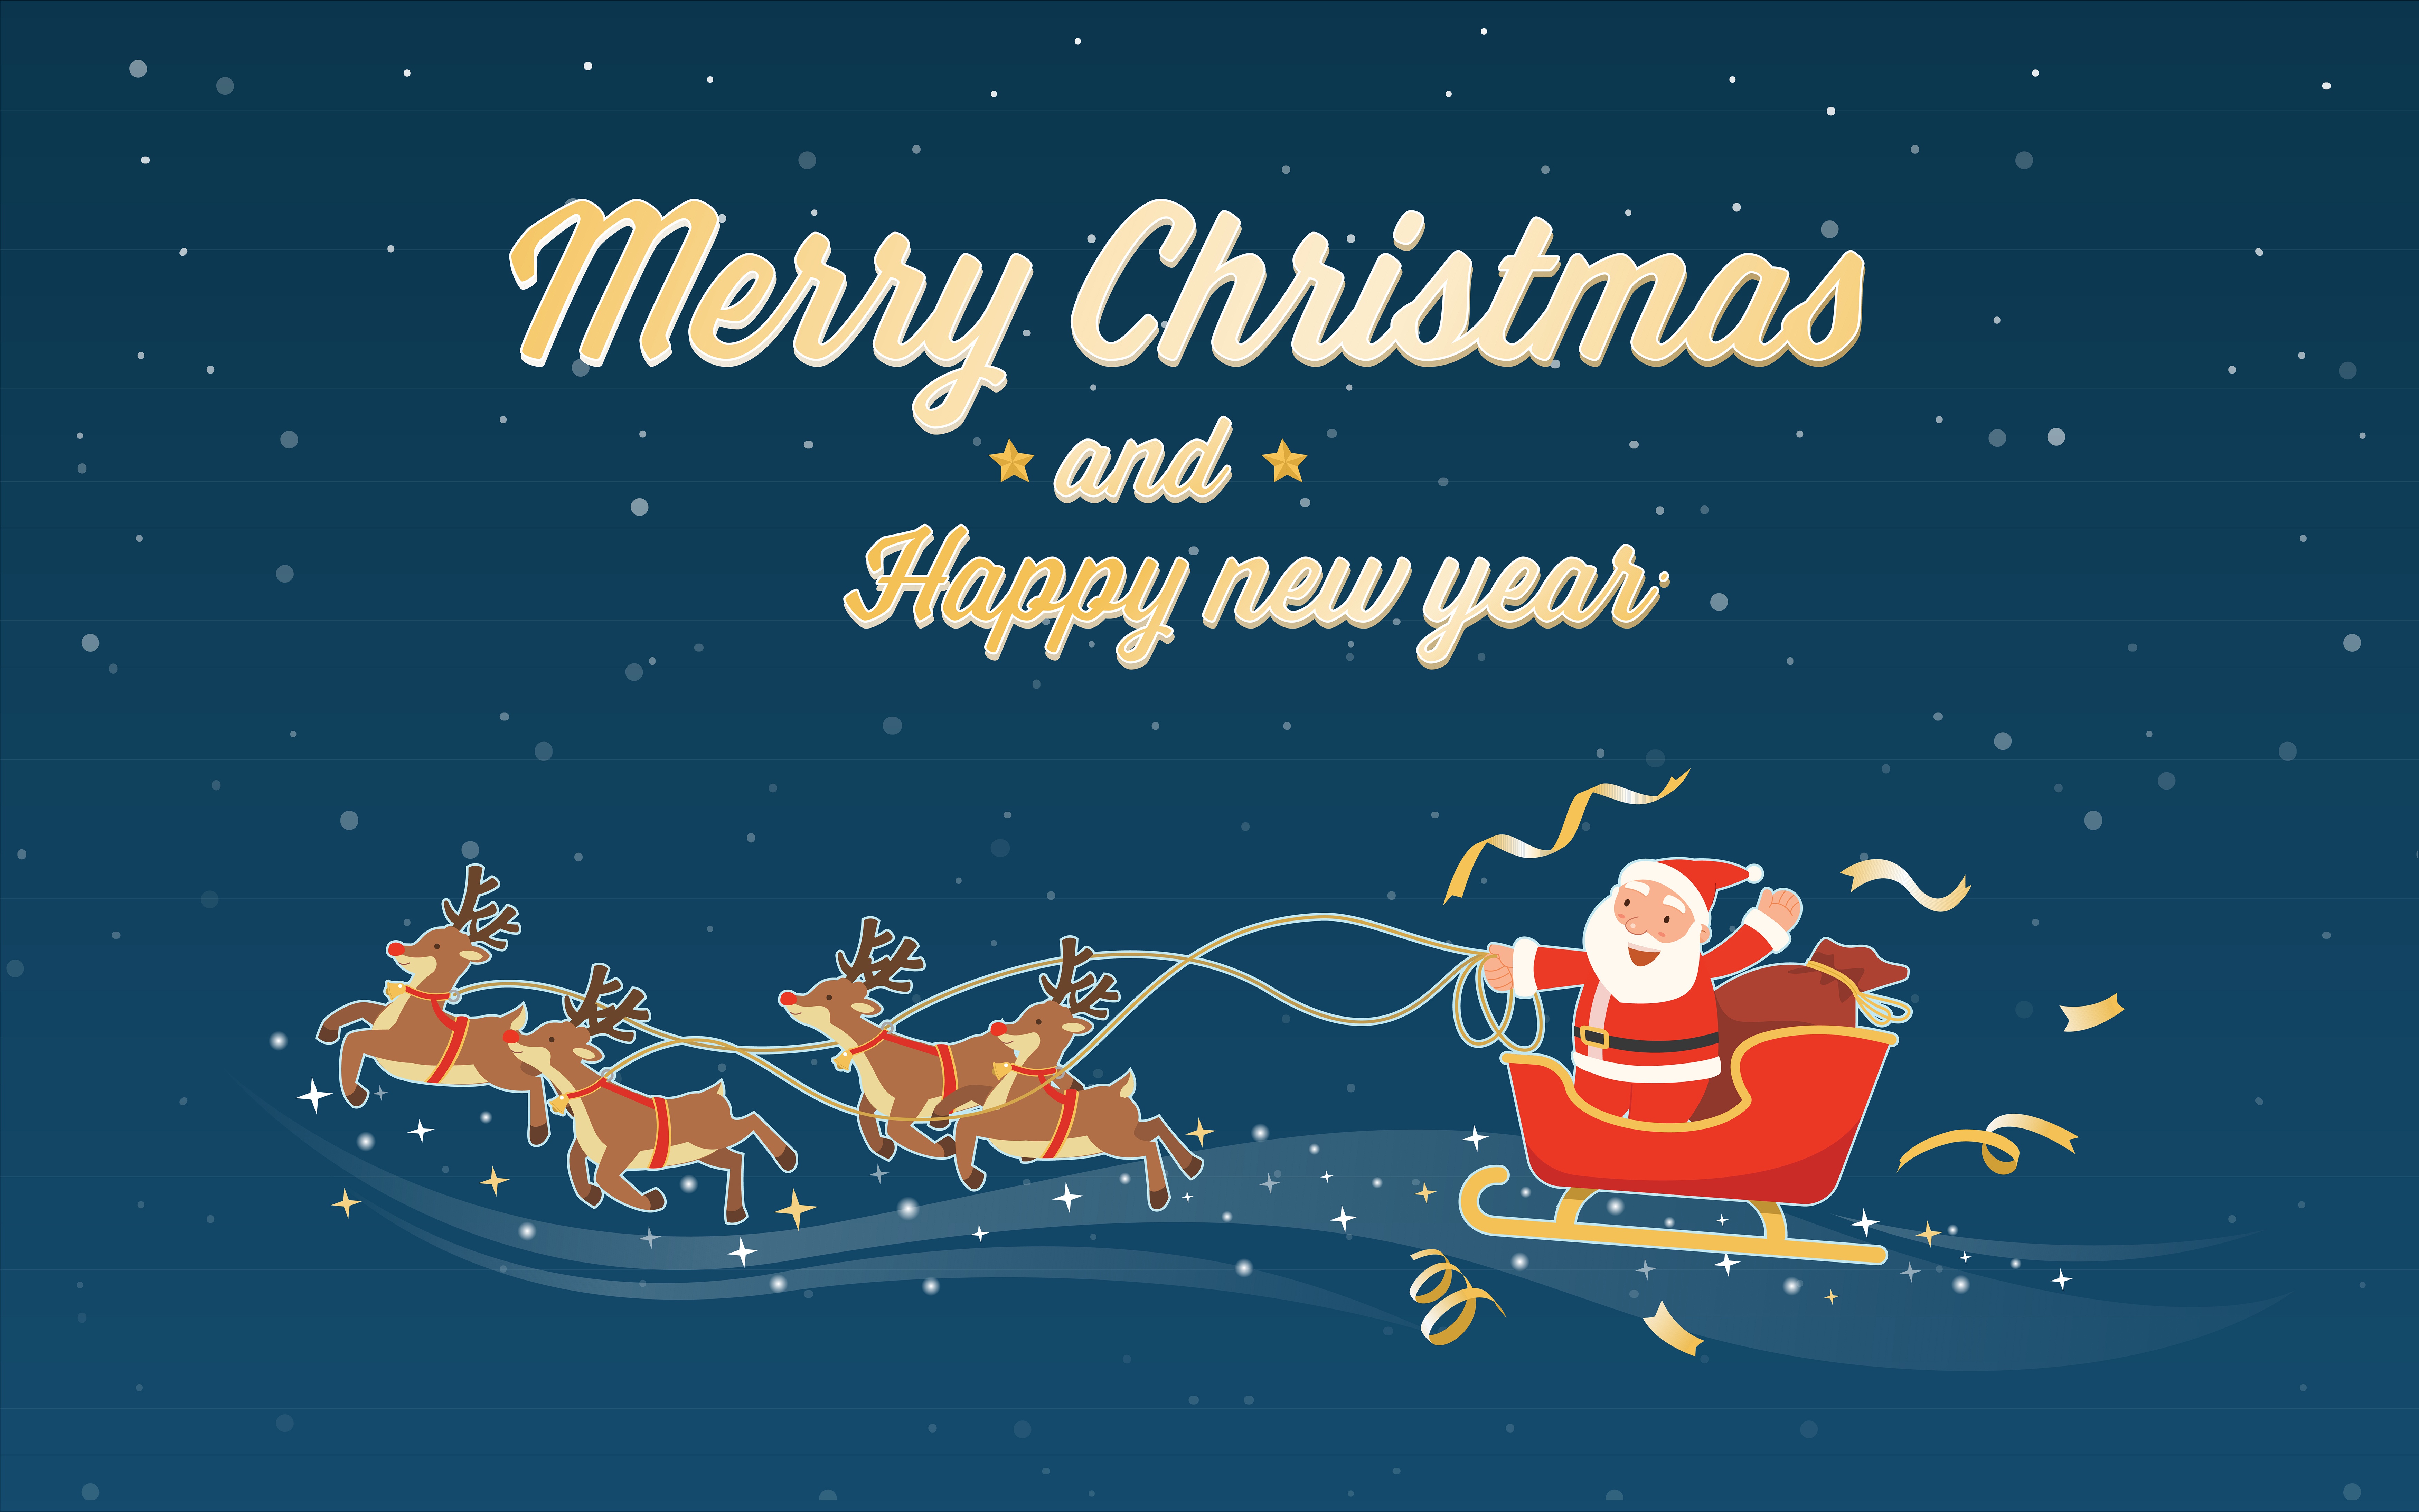 Download mobile wallpaper Christmas, Holiday, Santa, Merry Christmas for free.